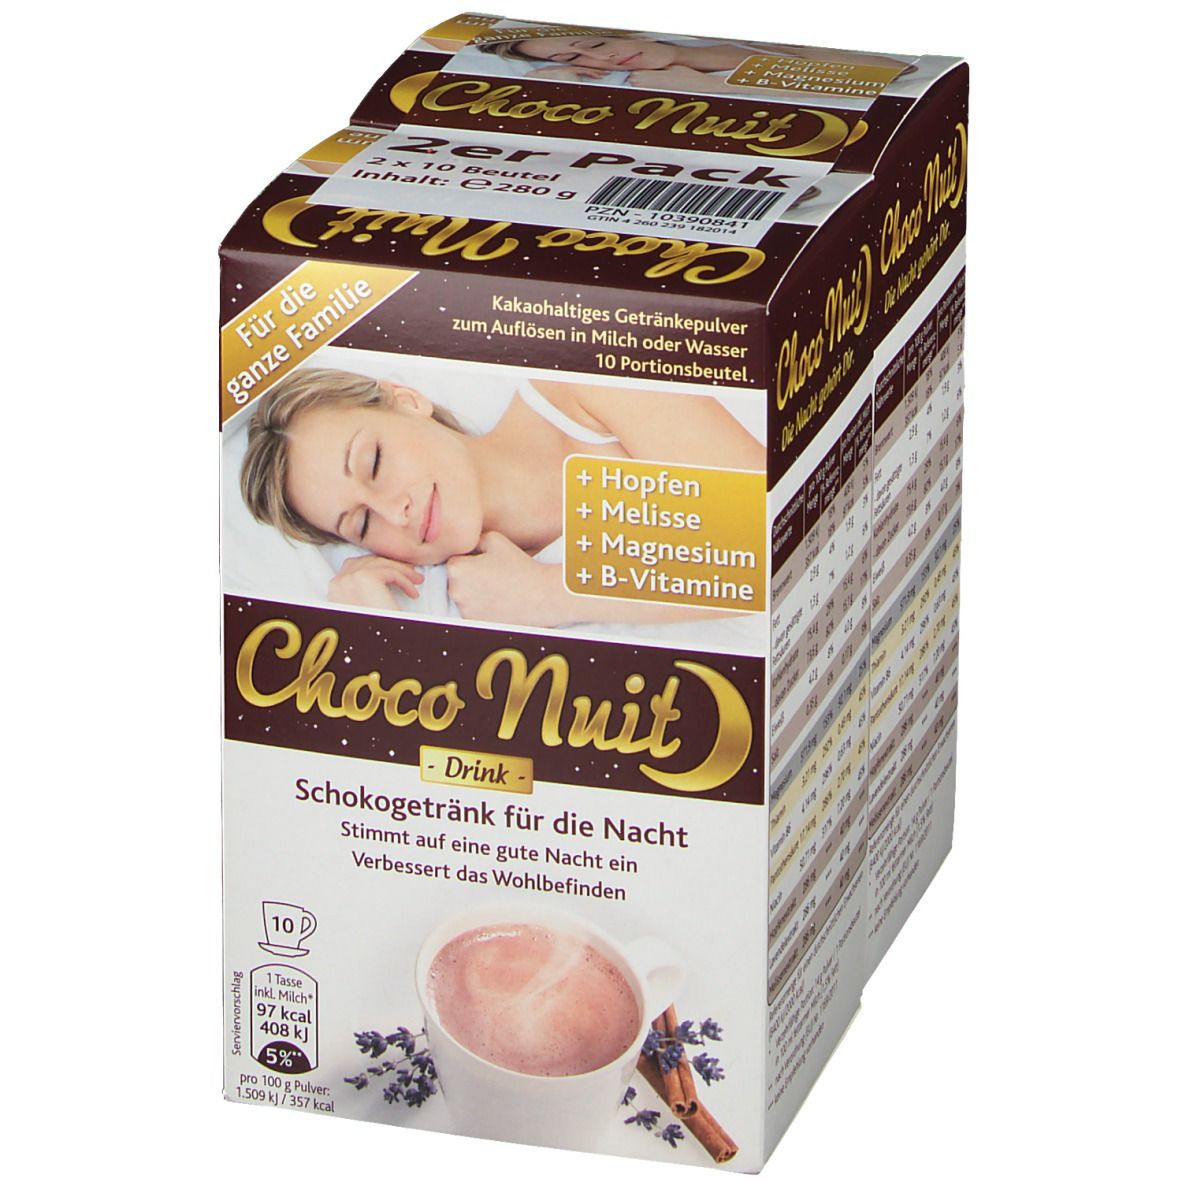 Choco Nuit Drink